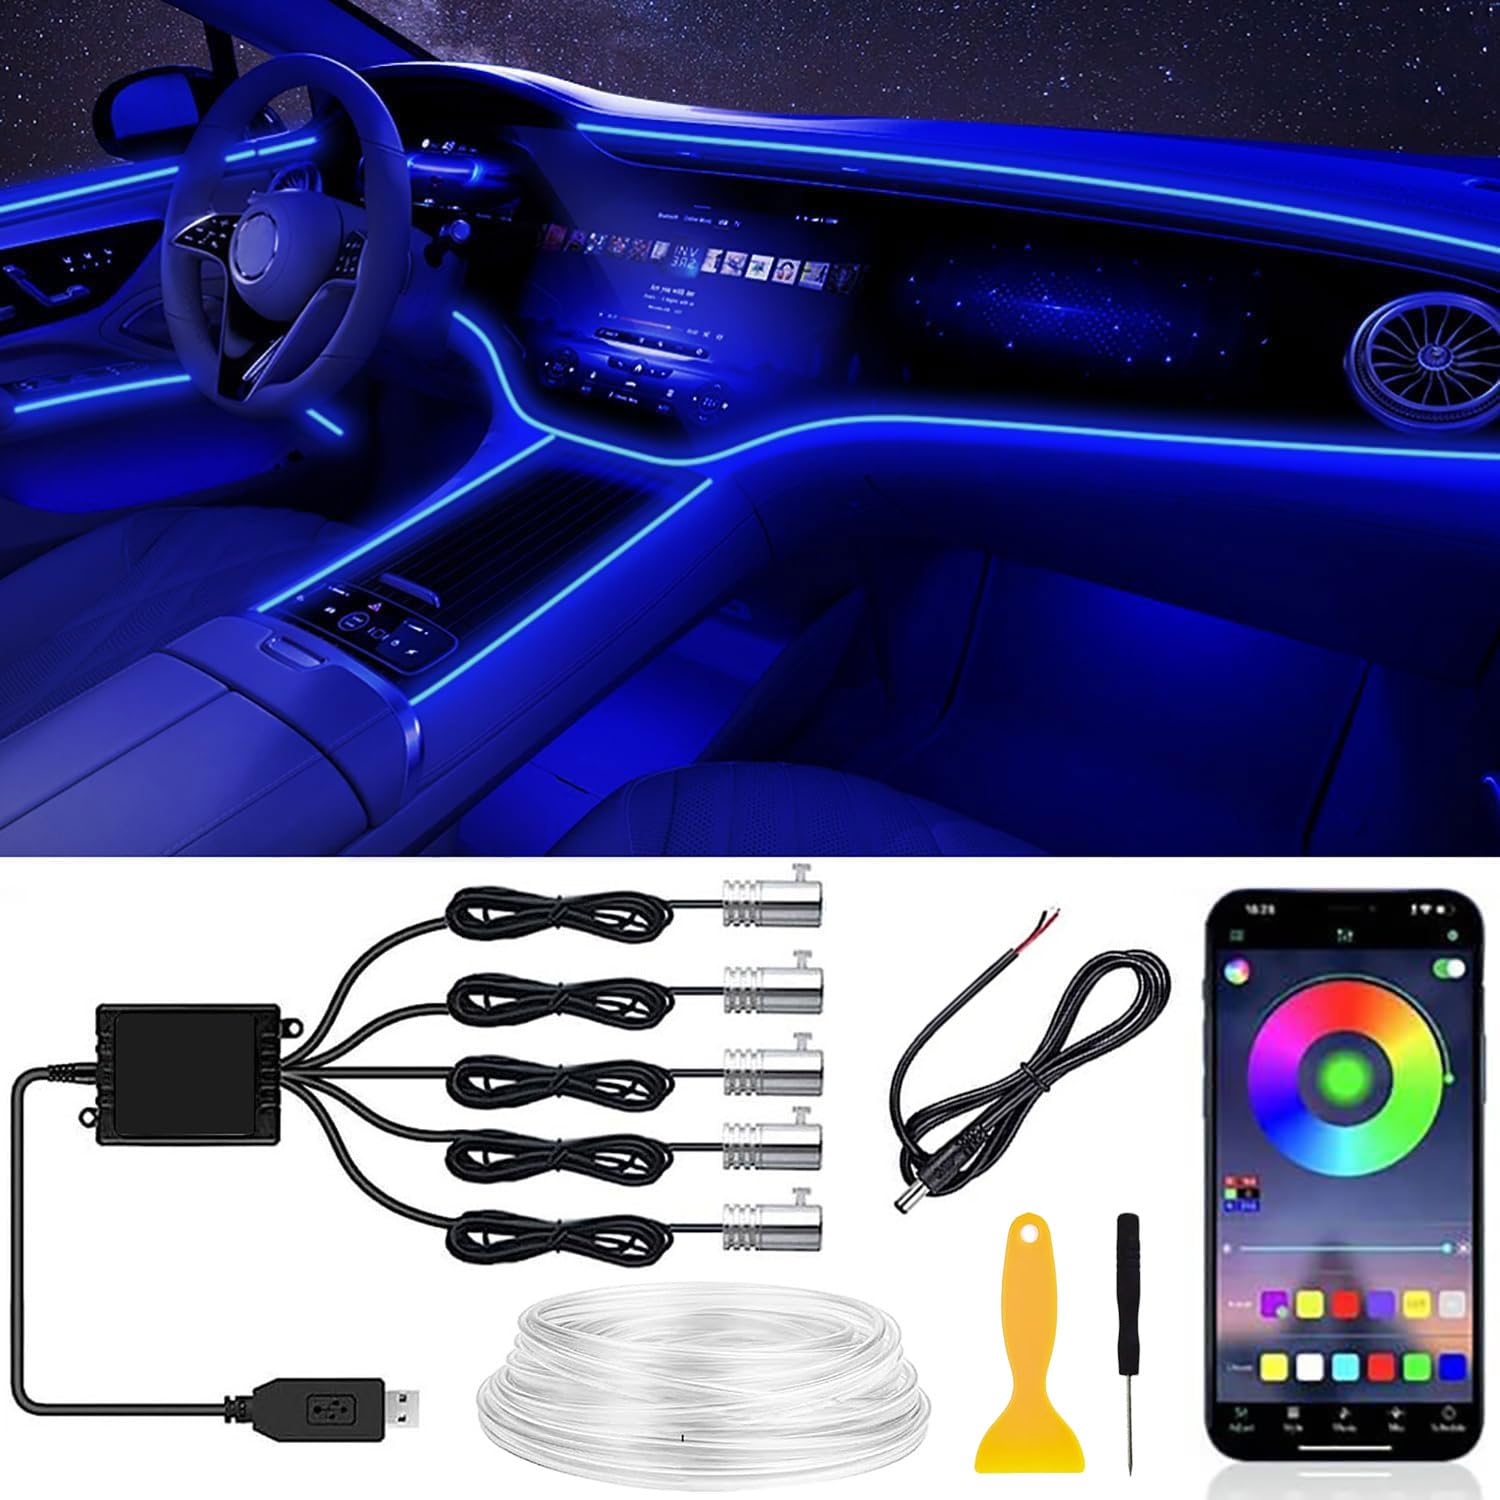 Auto LED Innenbeleuchtung,6M/5 in 1 RGB Auto LED Umgebungslicht,12V Led Atmosphäre Licht Auto mit APP Steuerung,Led Auto Innenraumbeleuchtung,Auto Atmosphärenlicht von Shengruili